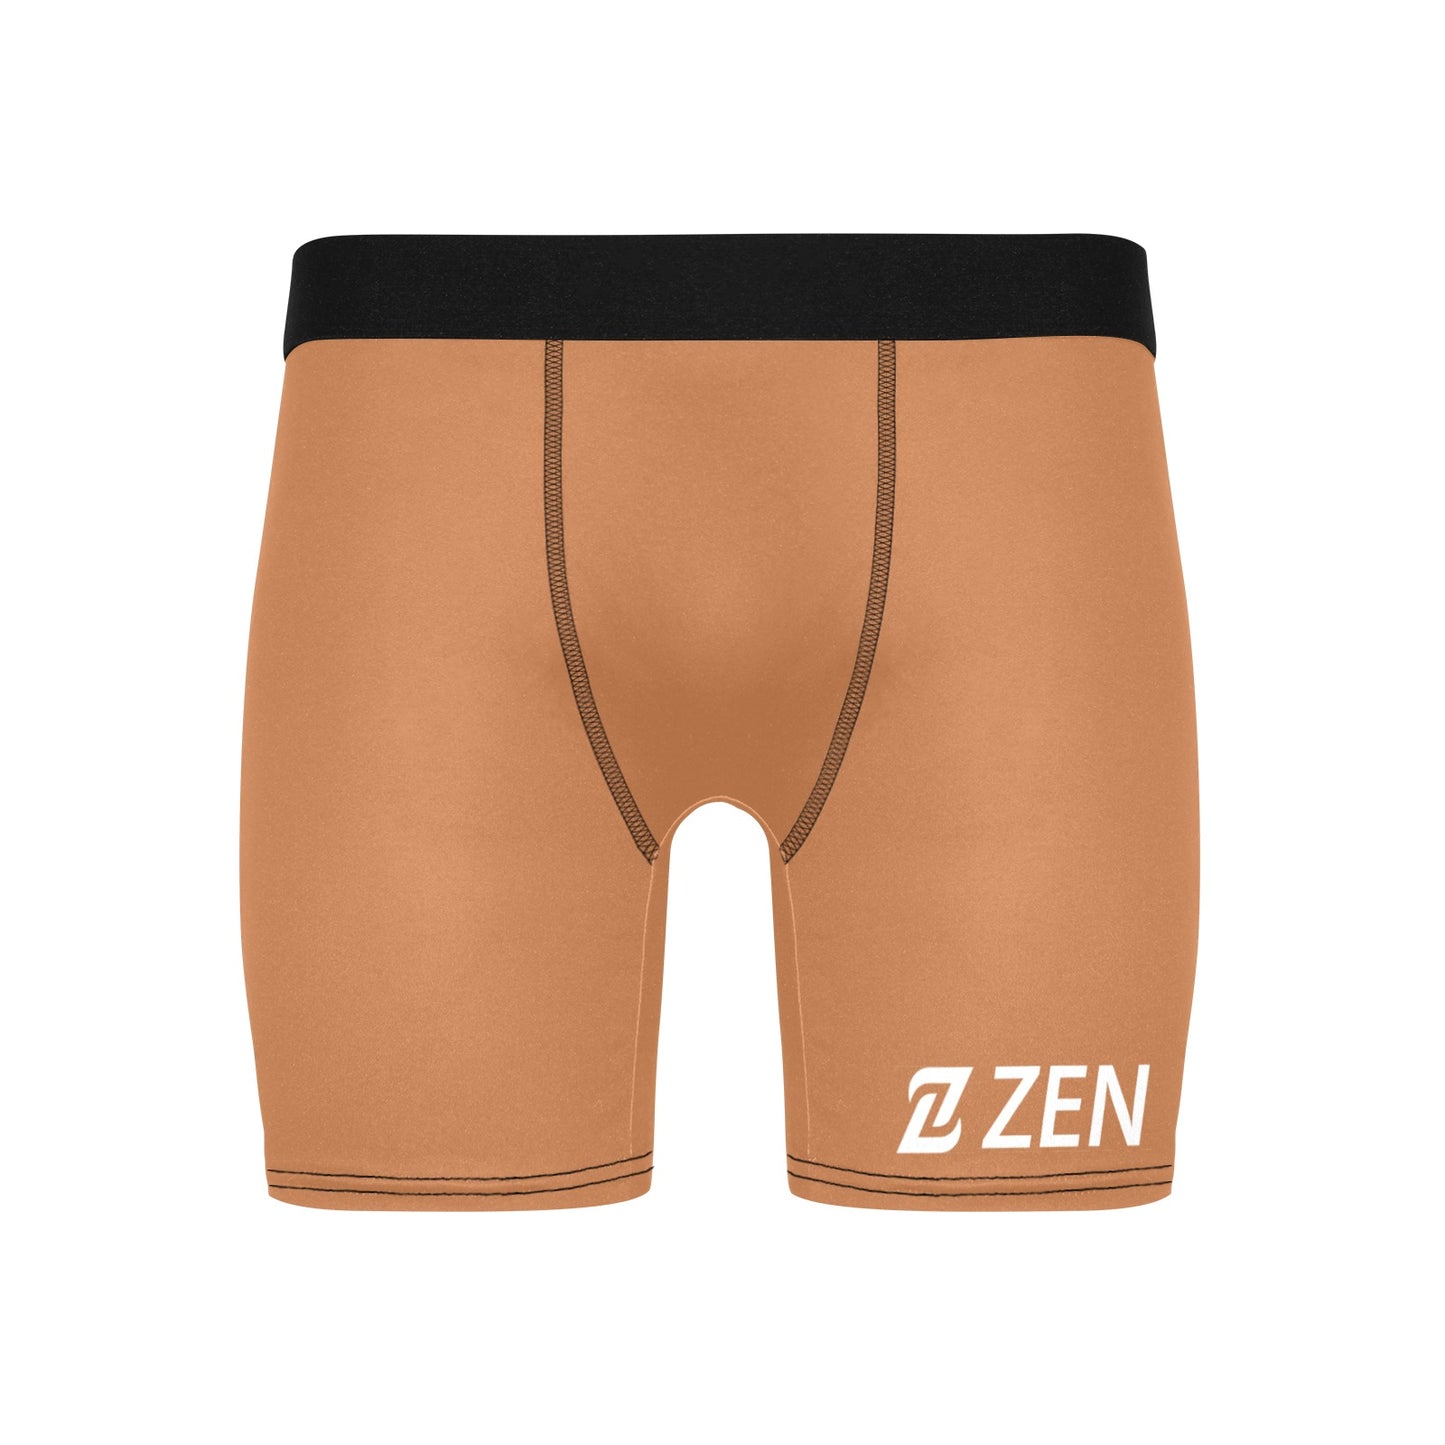 Zen Boxers Long - Nude Brown Tan